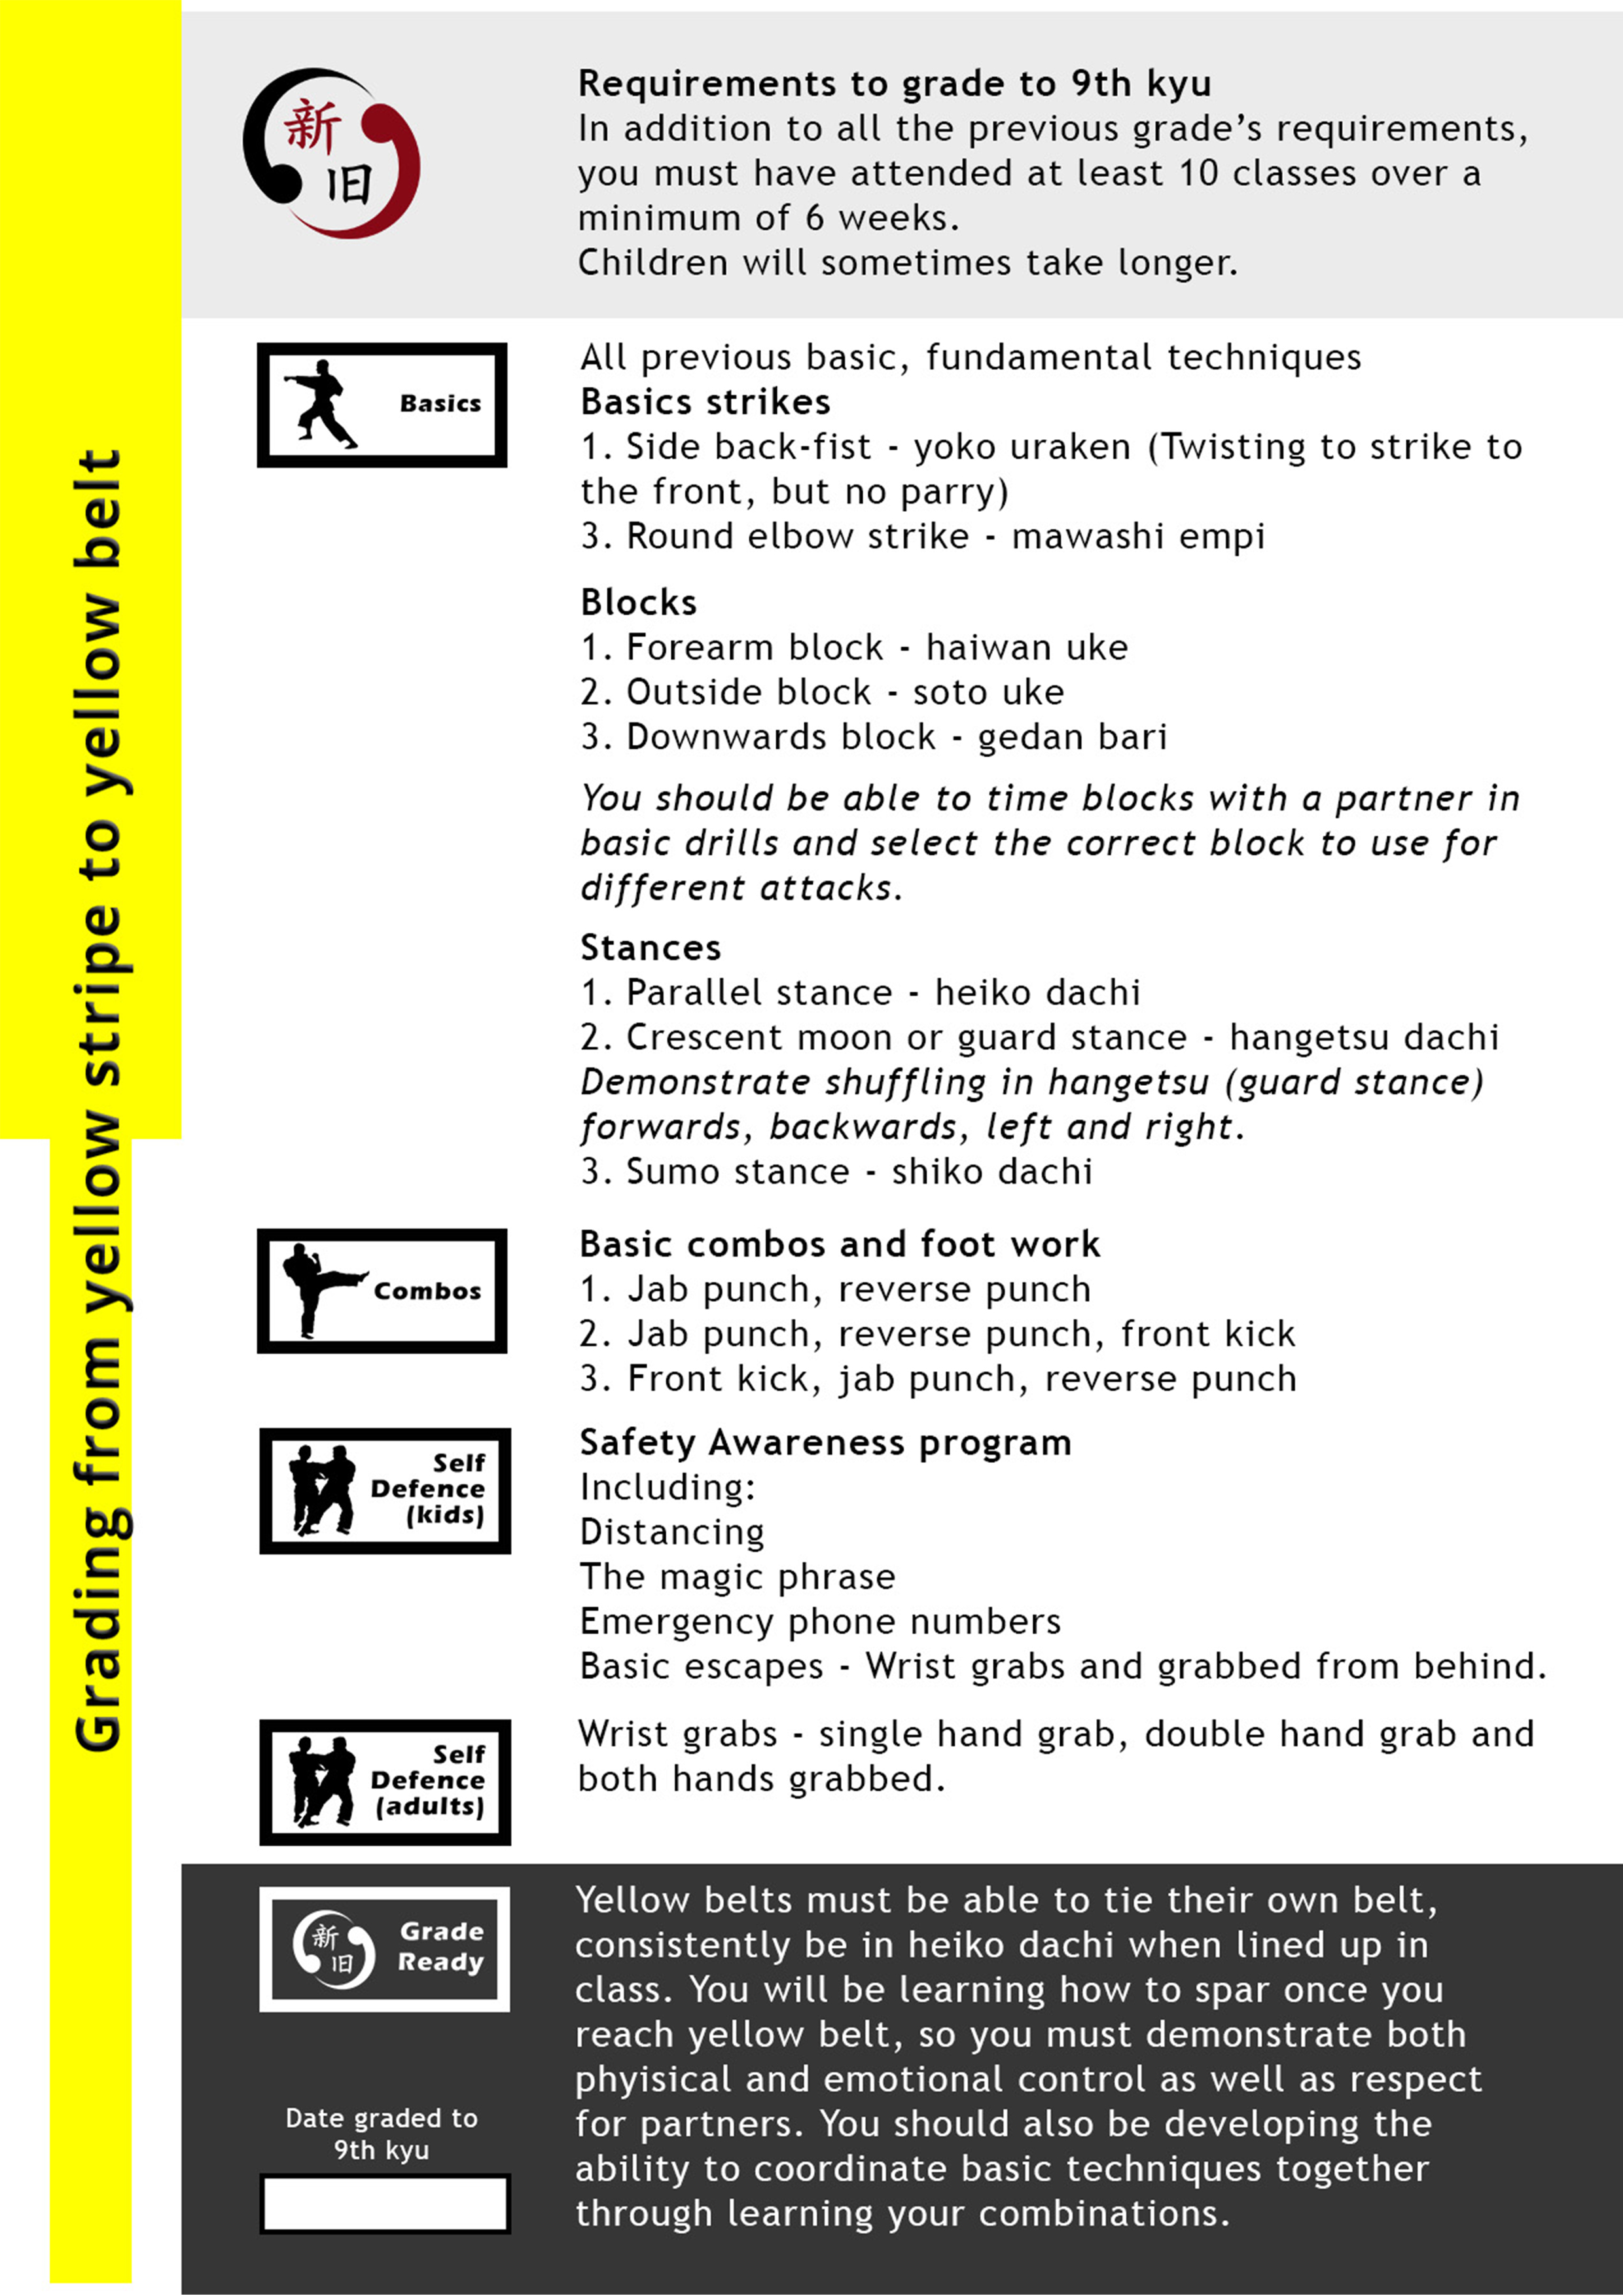 9th kyu yellow belt grading criteria - Shinkyu Martial Arts